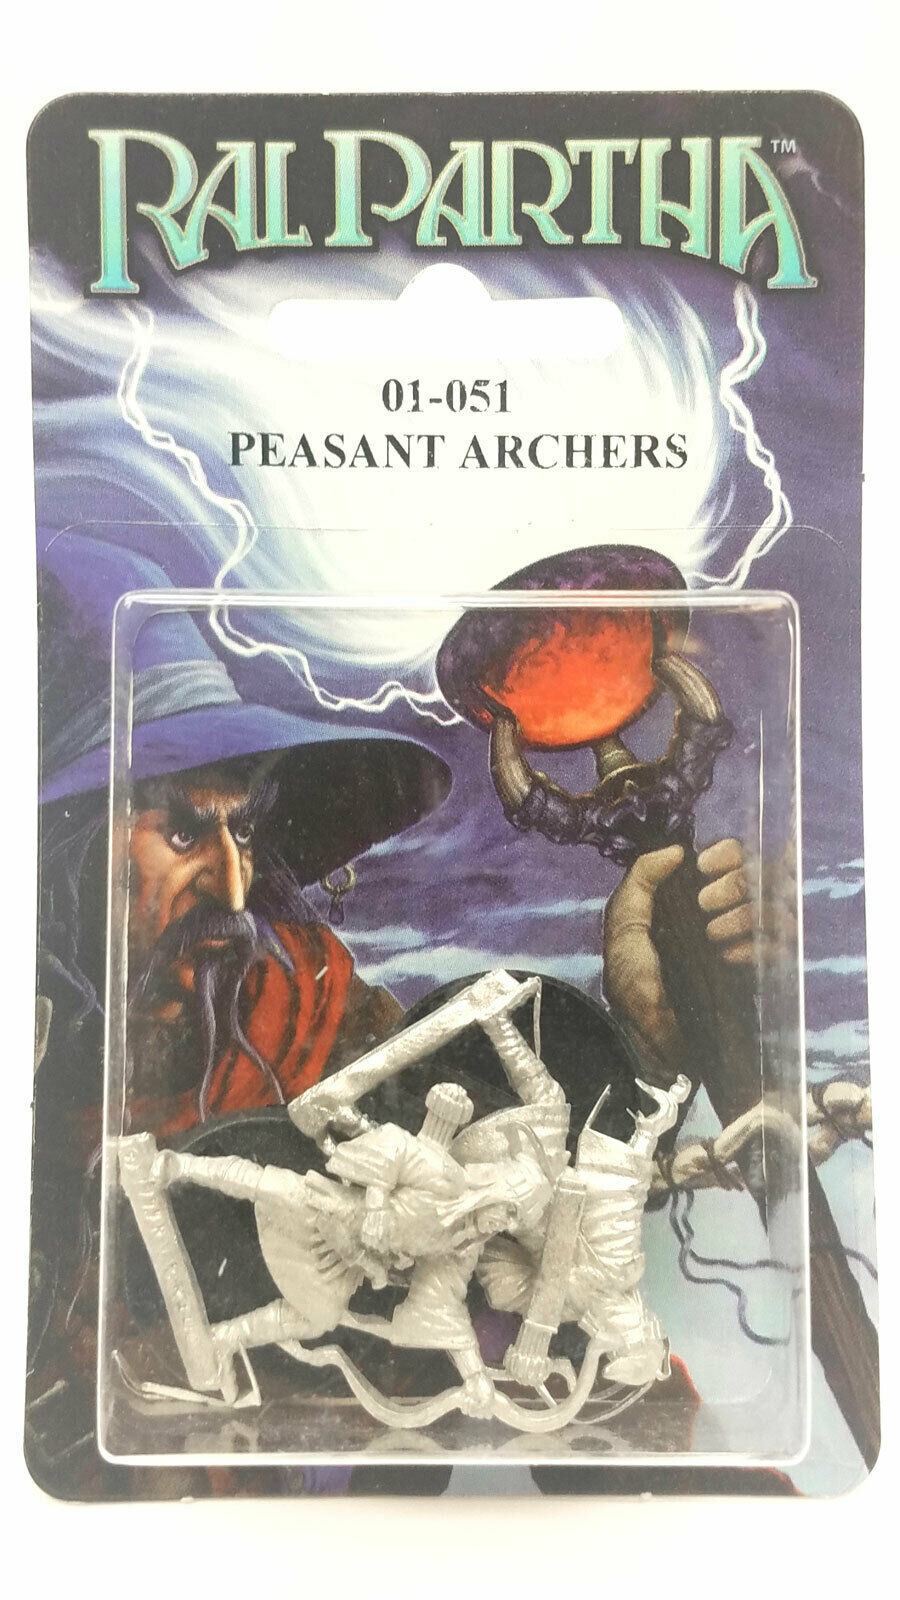 Ral Partha Peasant Archers (2 Pieces) #01-051 Unpainted Fantasy Metal Figure